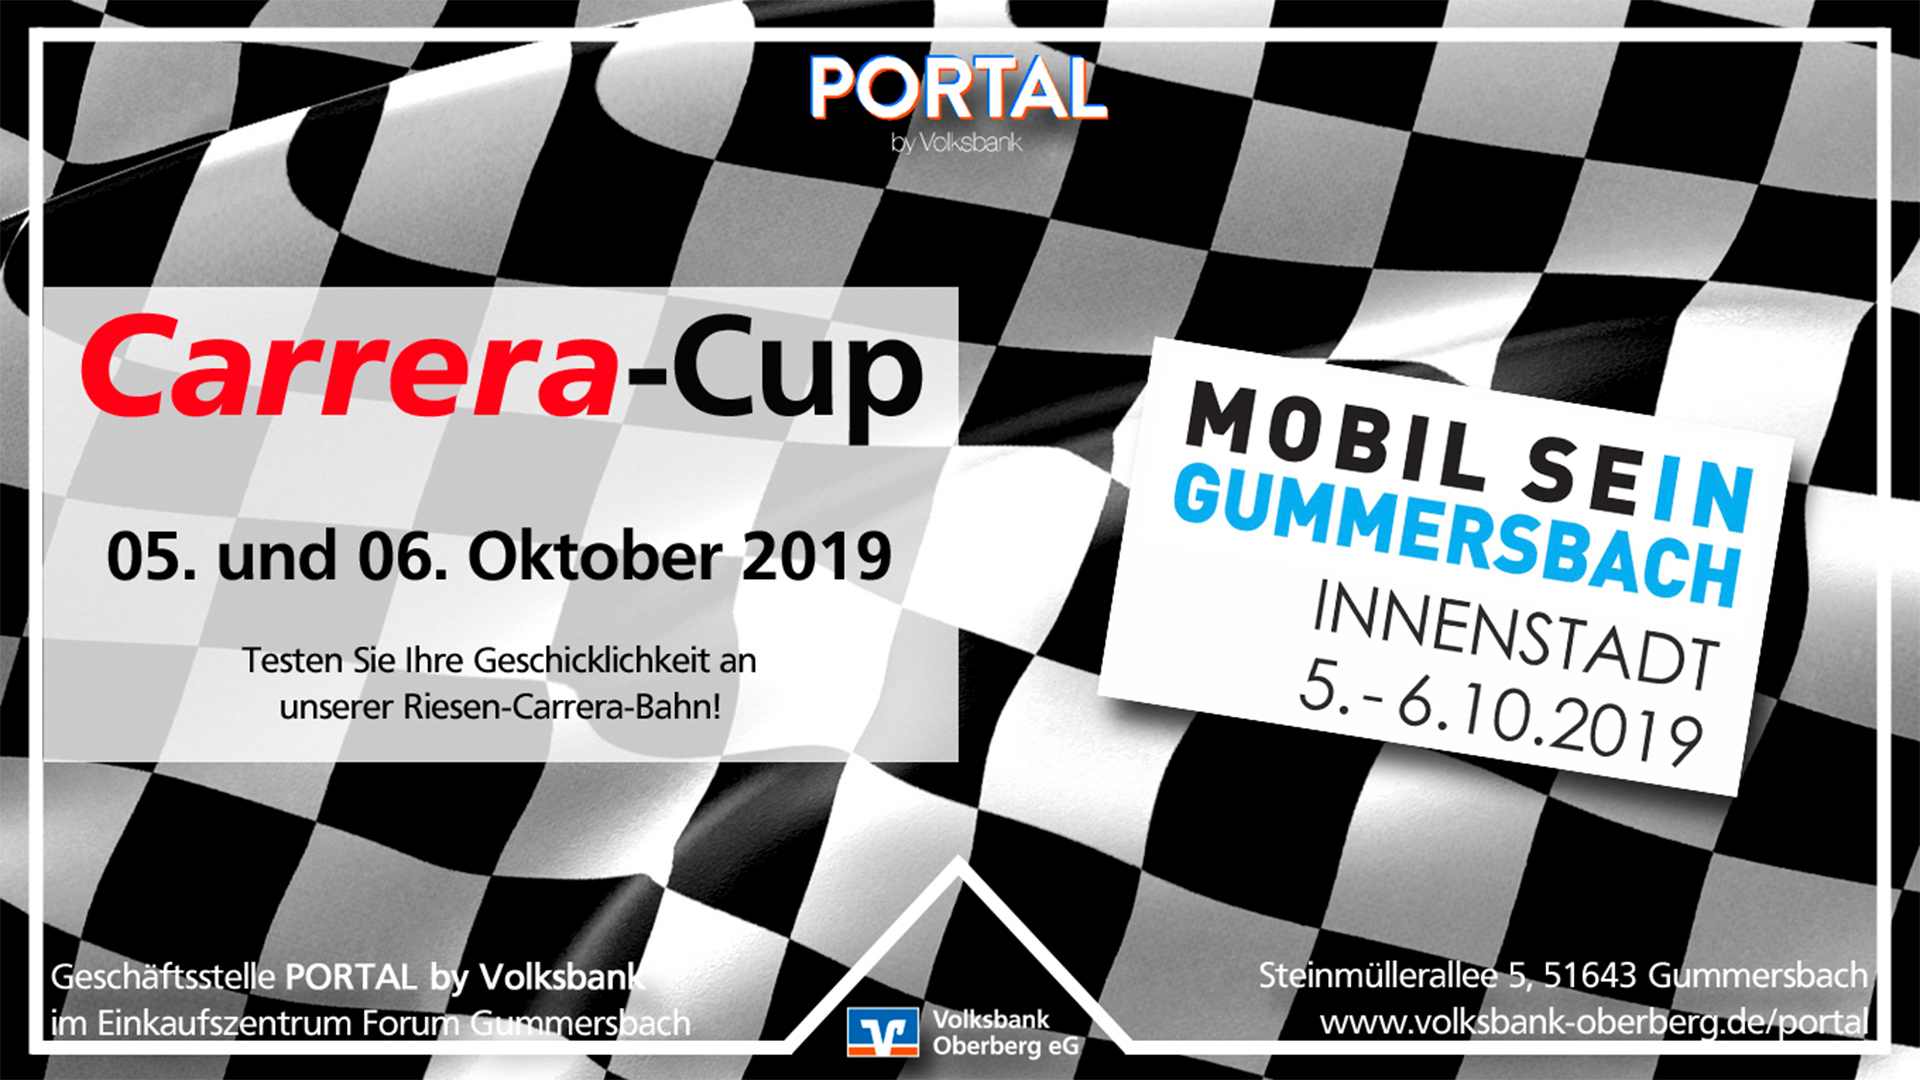 PORTAL by Volksbank | Carrera - Cup bei MOBIL SEIN Gummersbach 2019